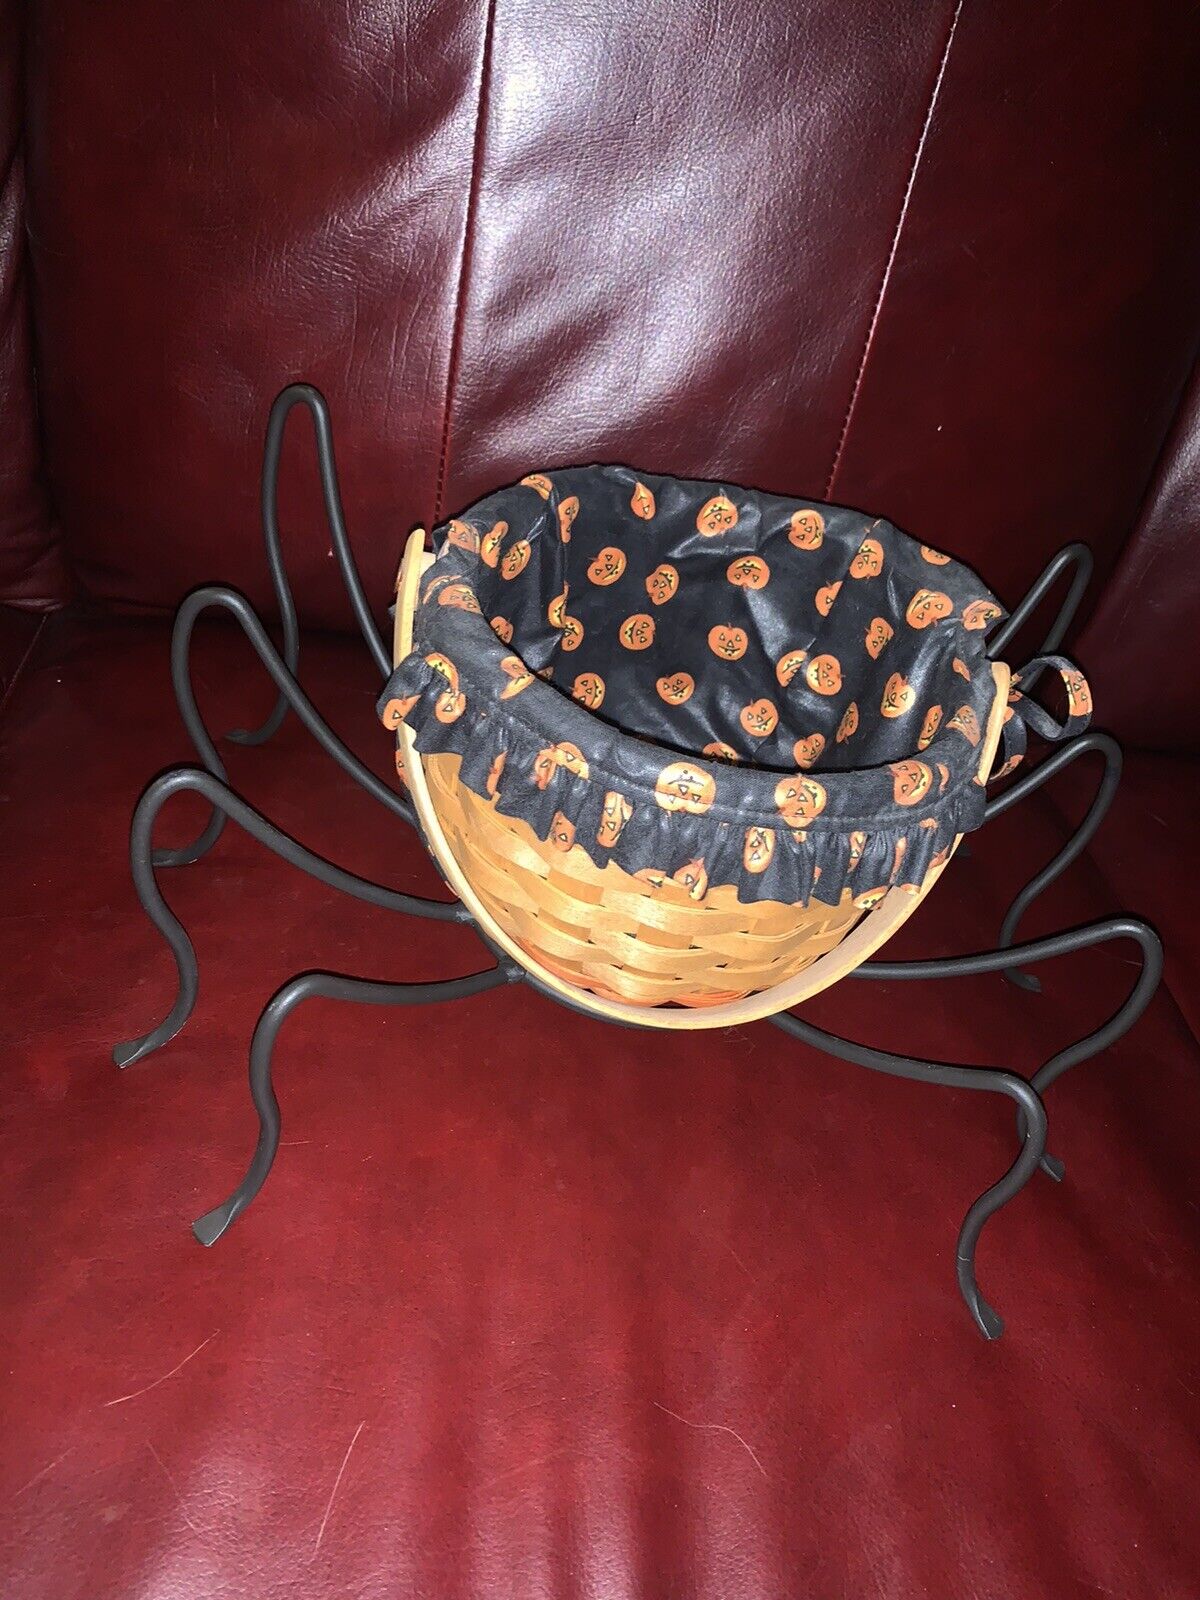 longaberger halloween basket with iron spider legs.